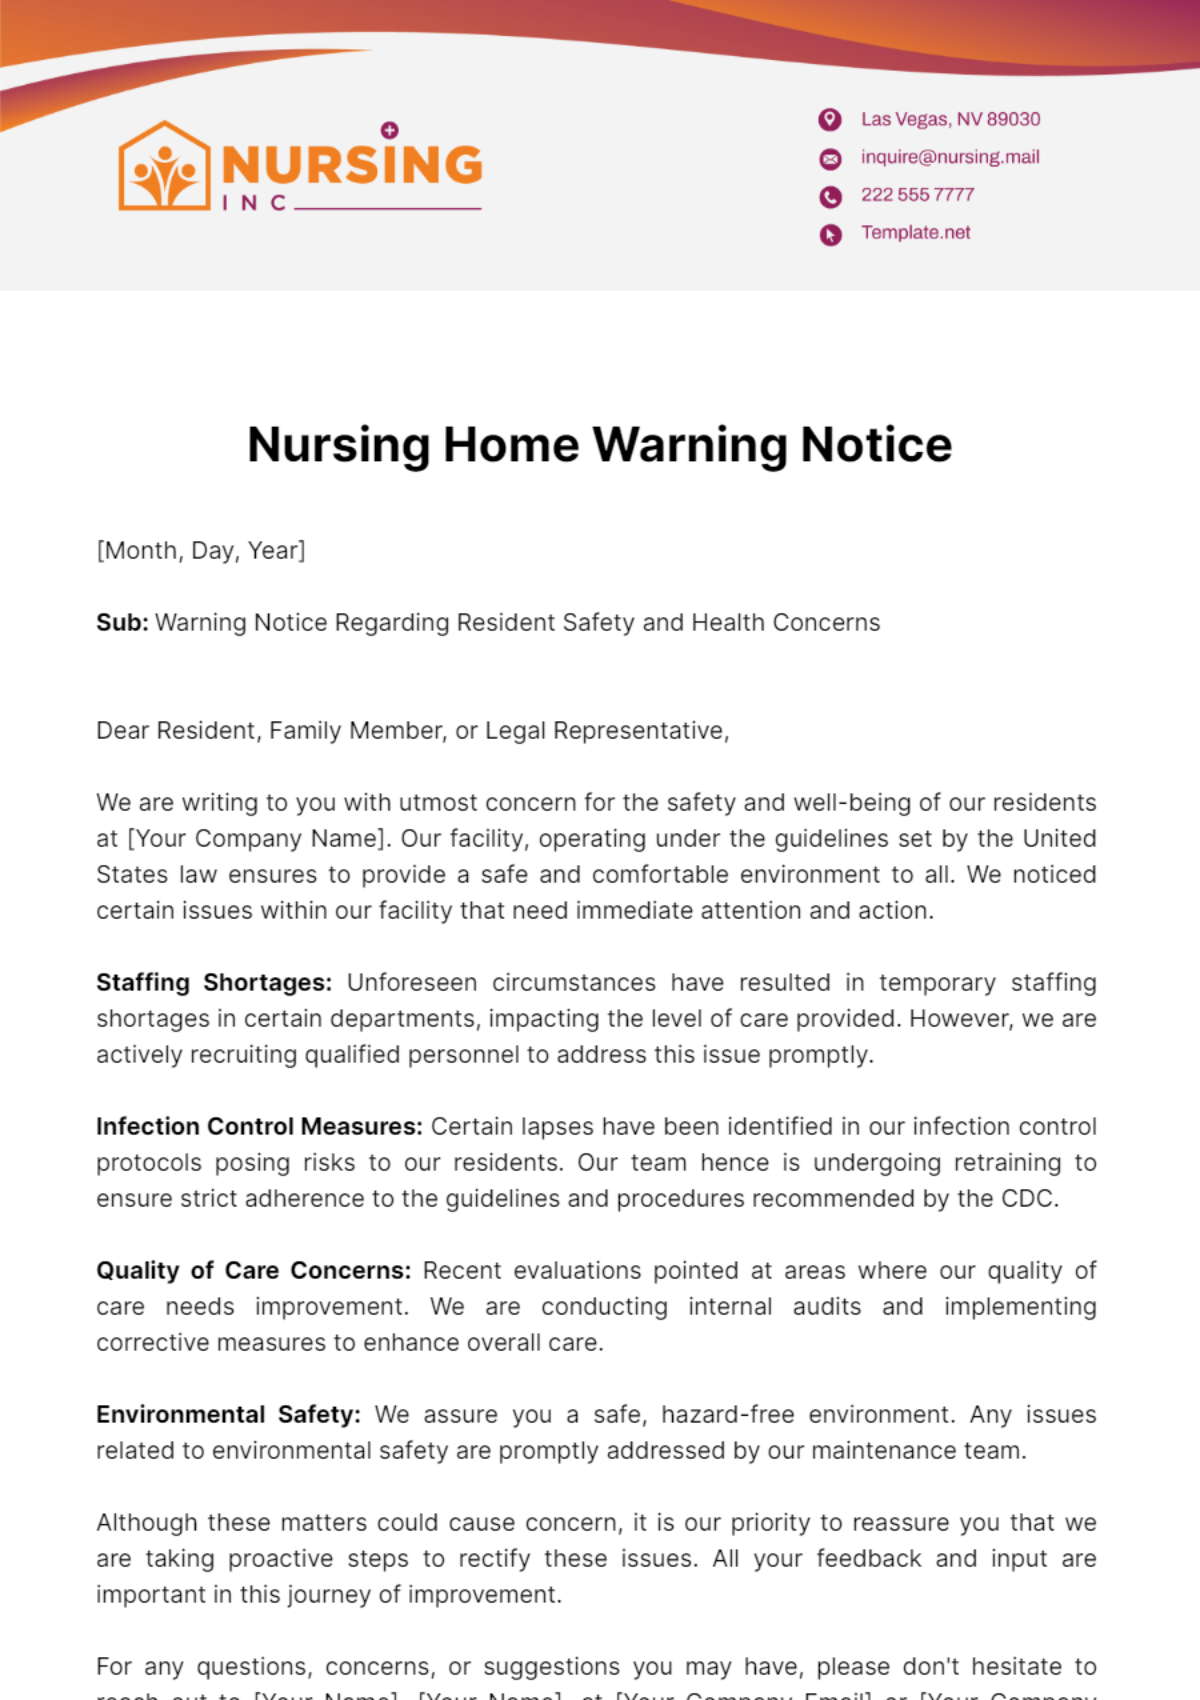 Nursing Home Warning Notice Template